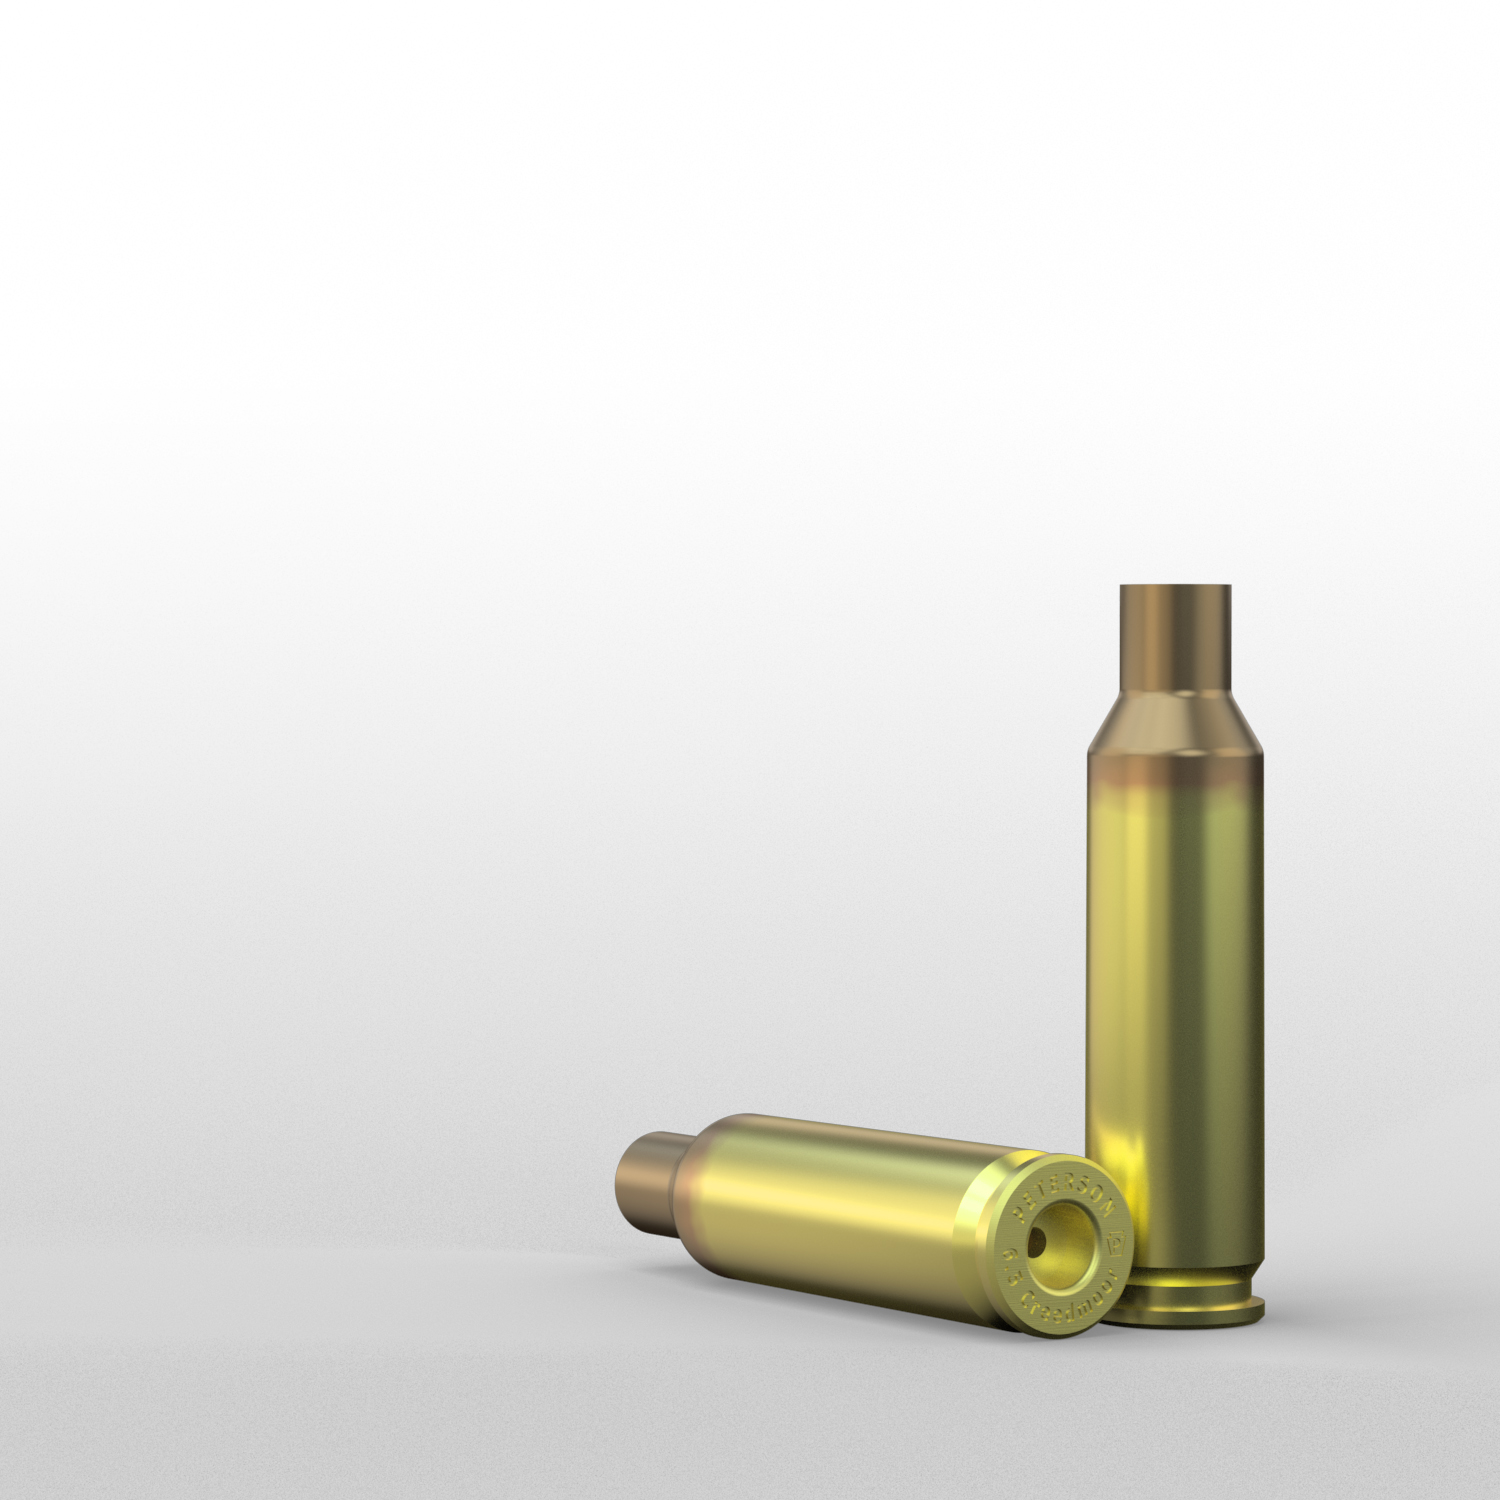 Hornady Superformance Ammunition - 6.5 Creedmoor - Brass Case